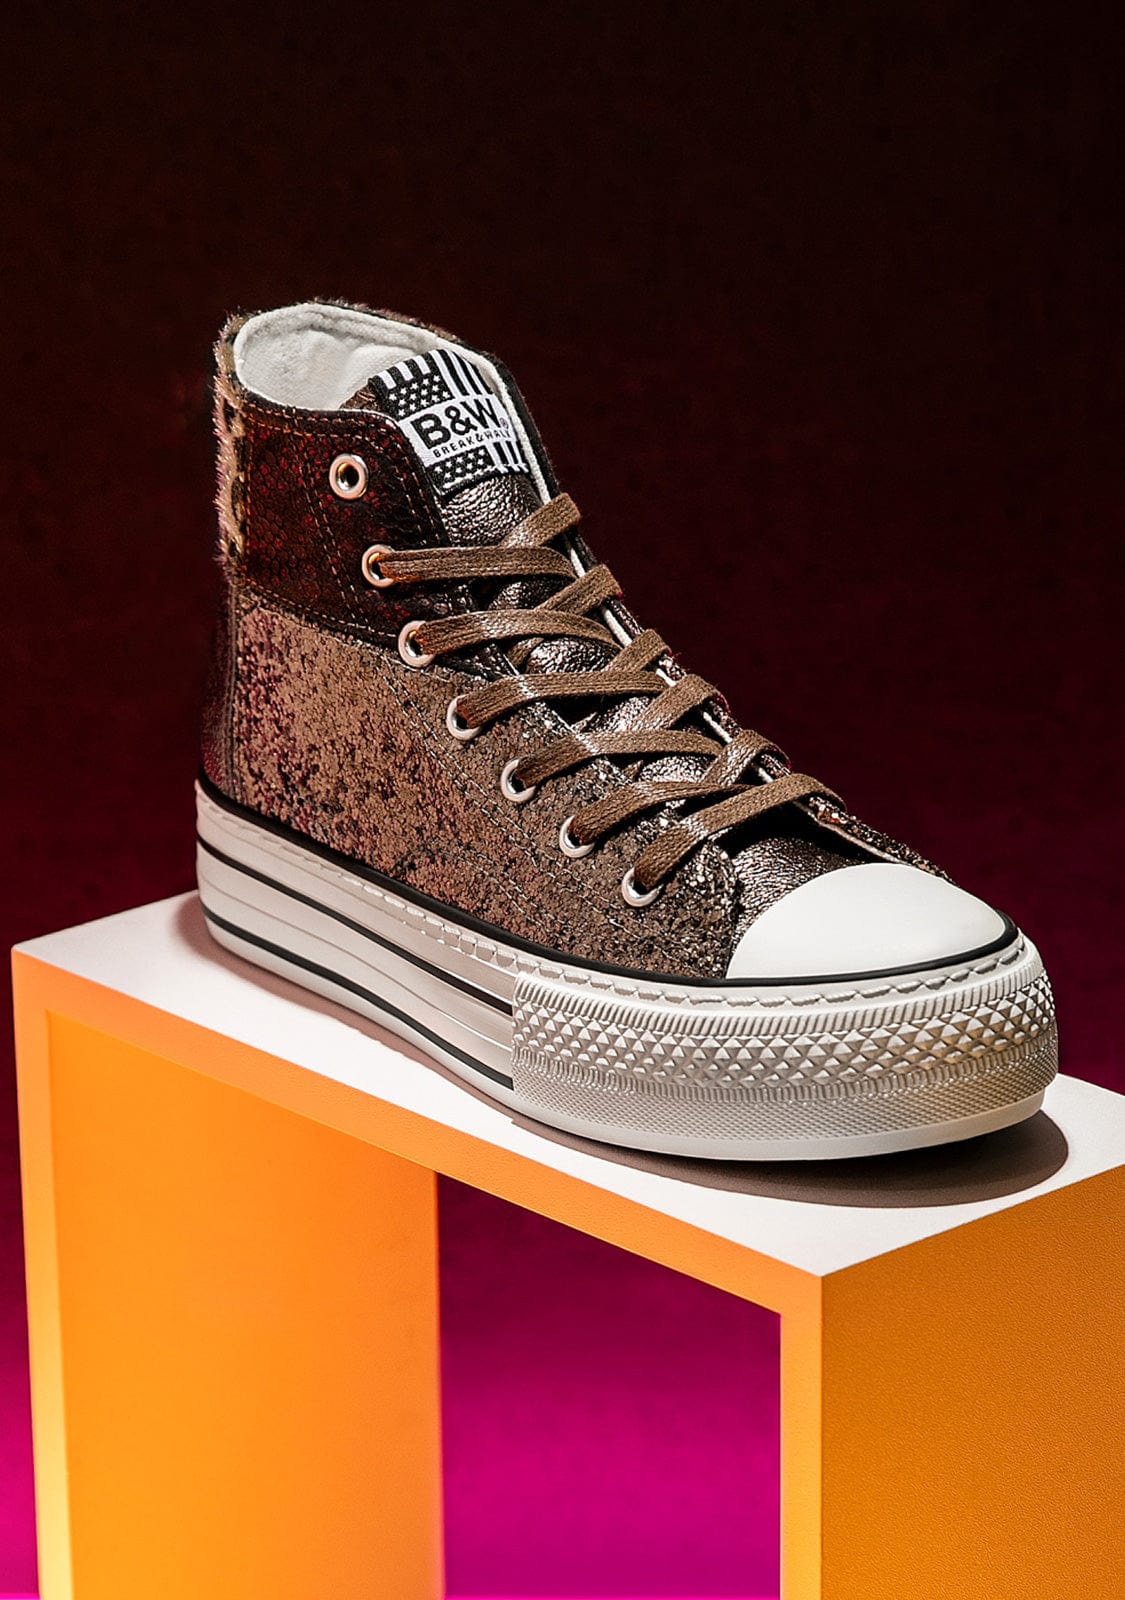 B & W Shoes Brown Leopard Platform Hi-Top Sneakers Glitter